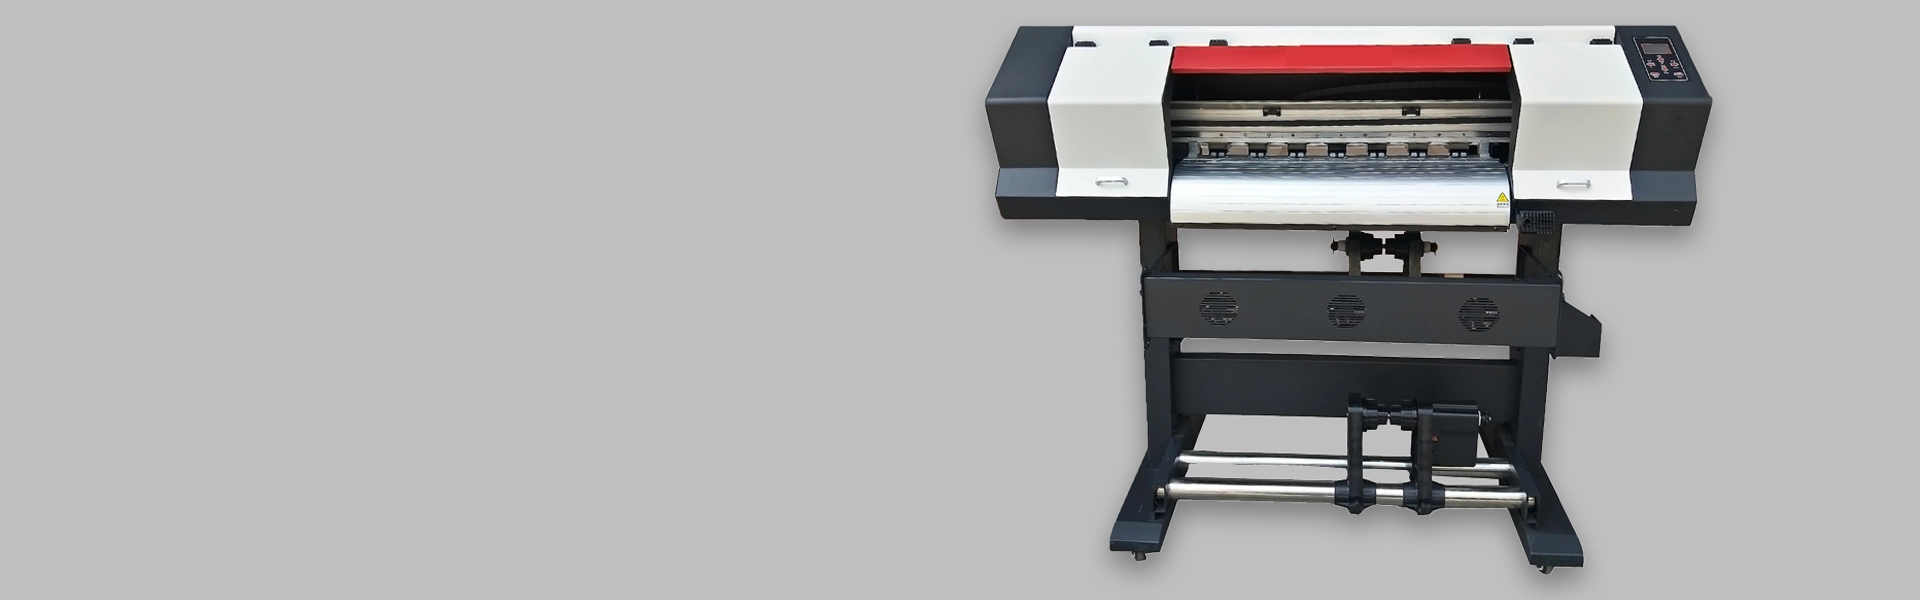 Impressora XP600 de 70 cm